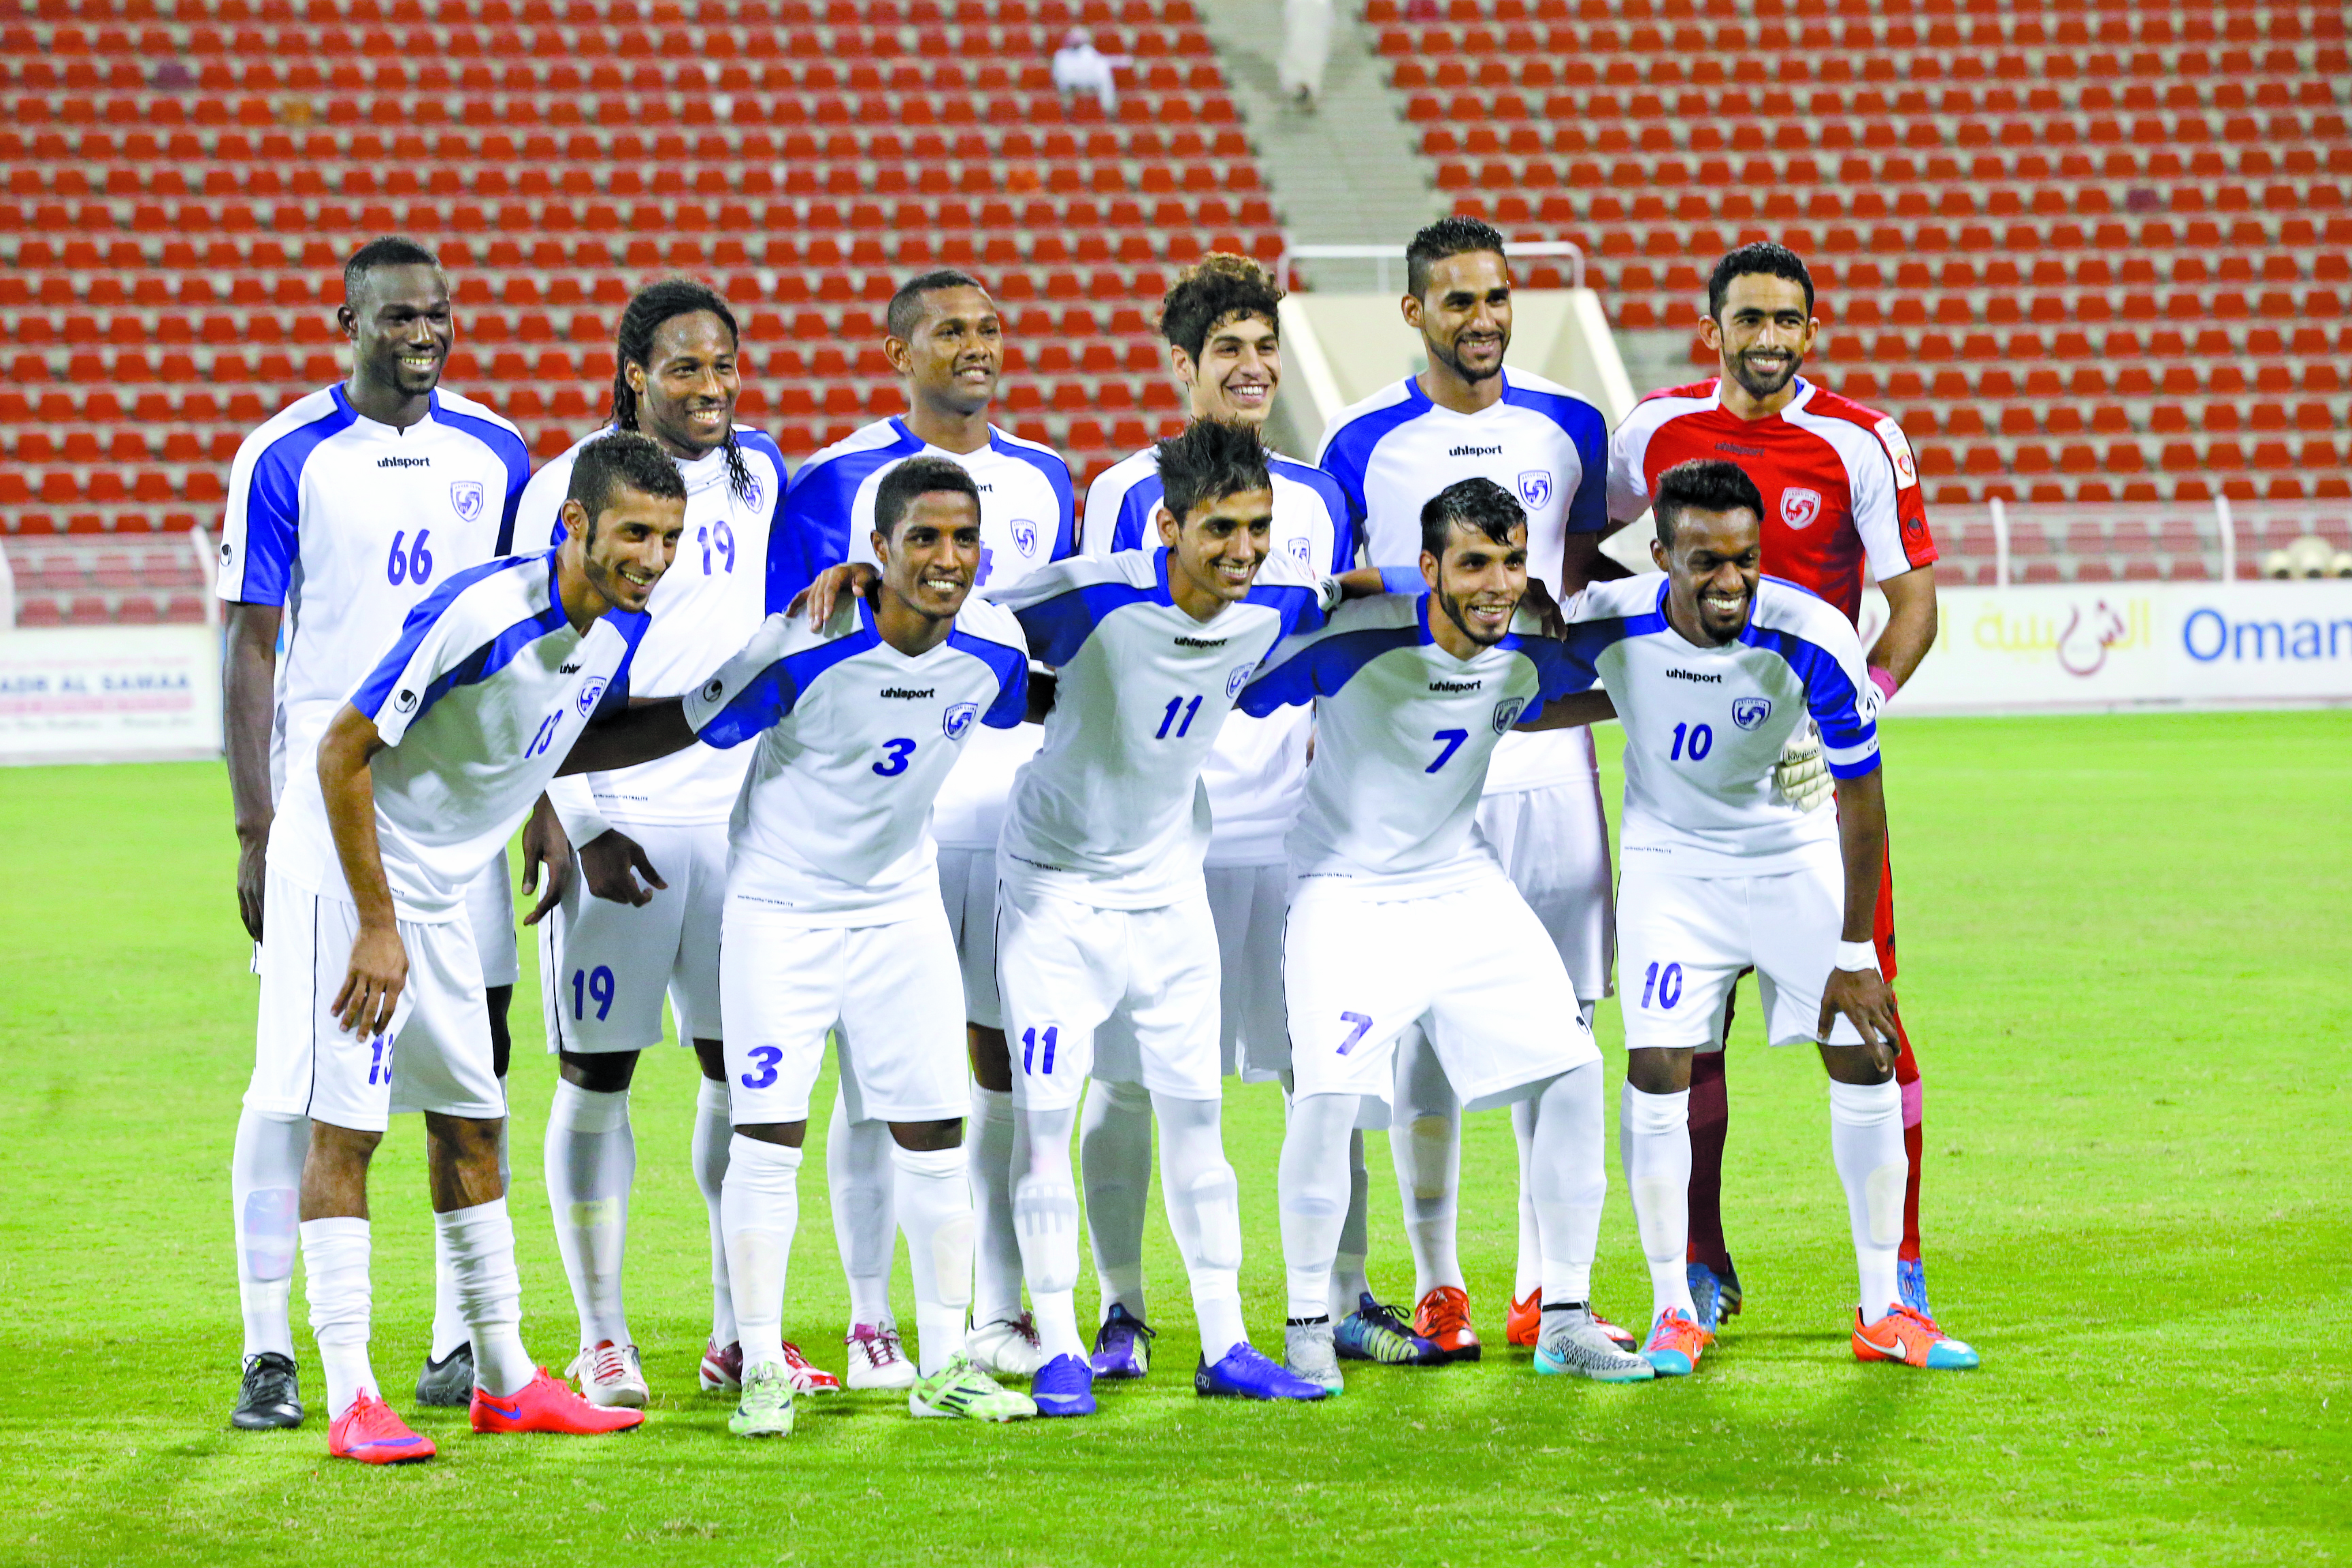 Saham, Al Khabourah set for His Majesty's Cup final